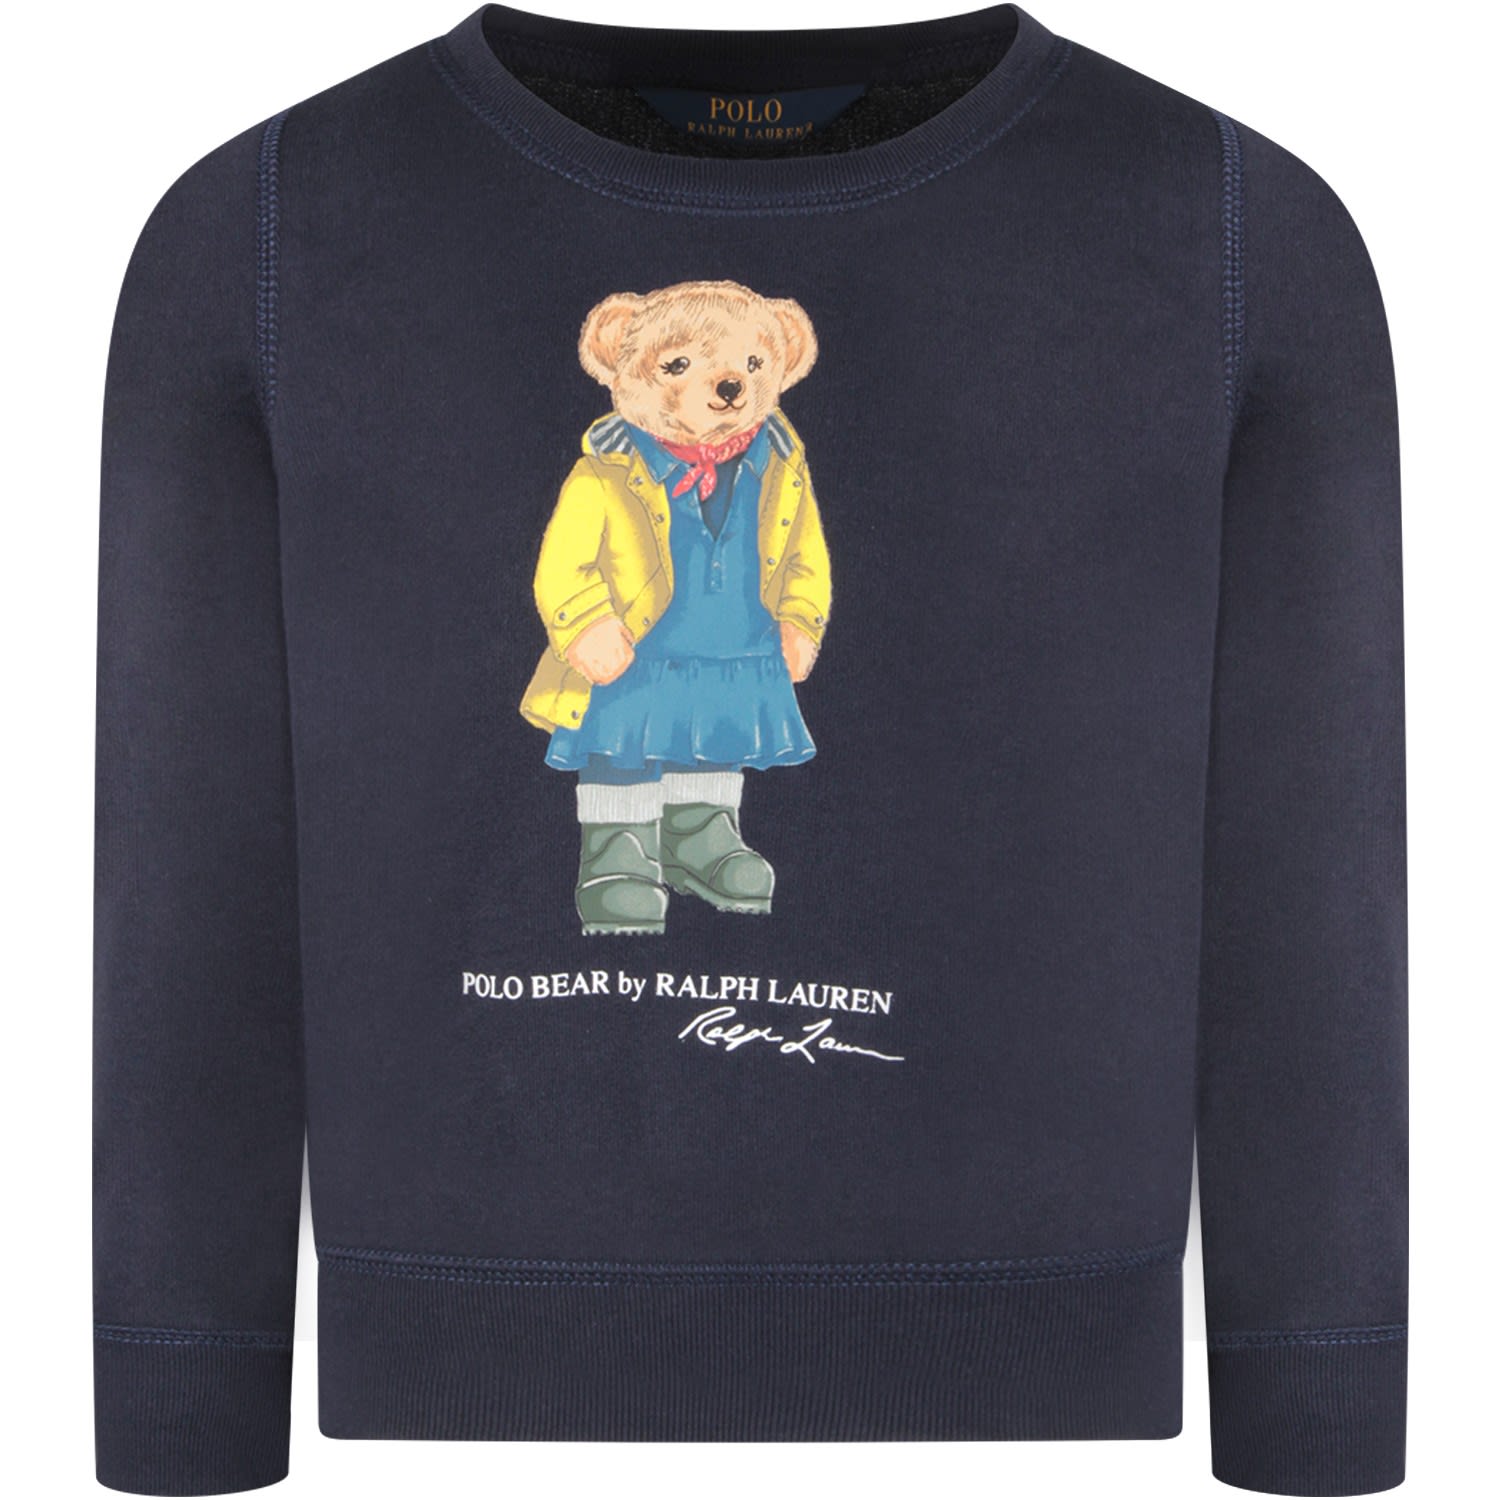 polo sweatshirt with teddy bear